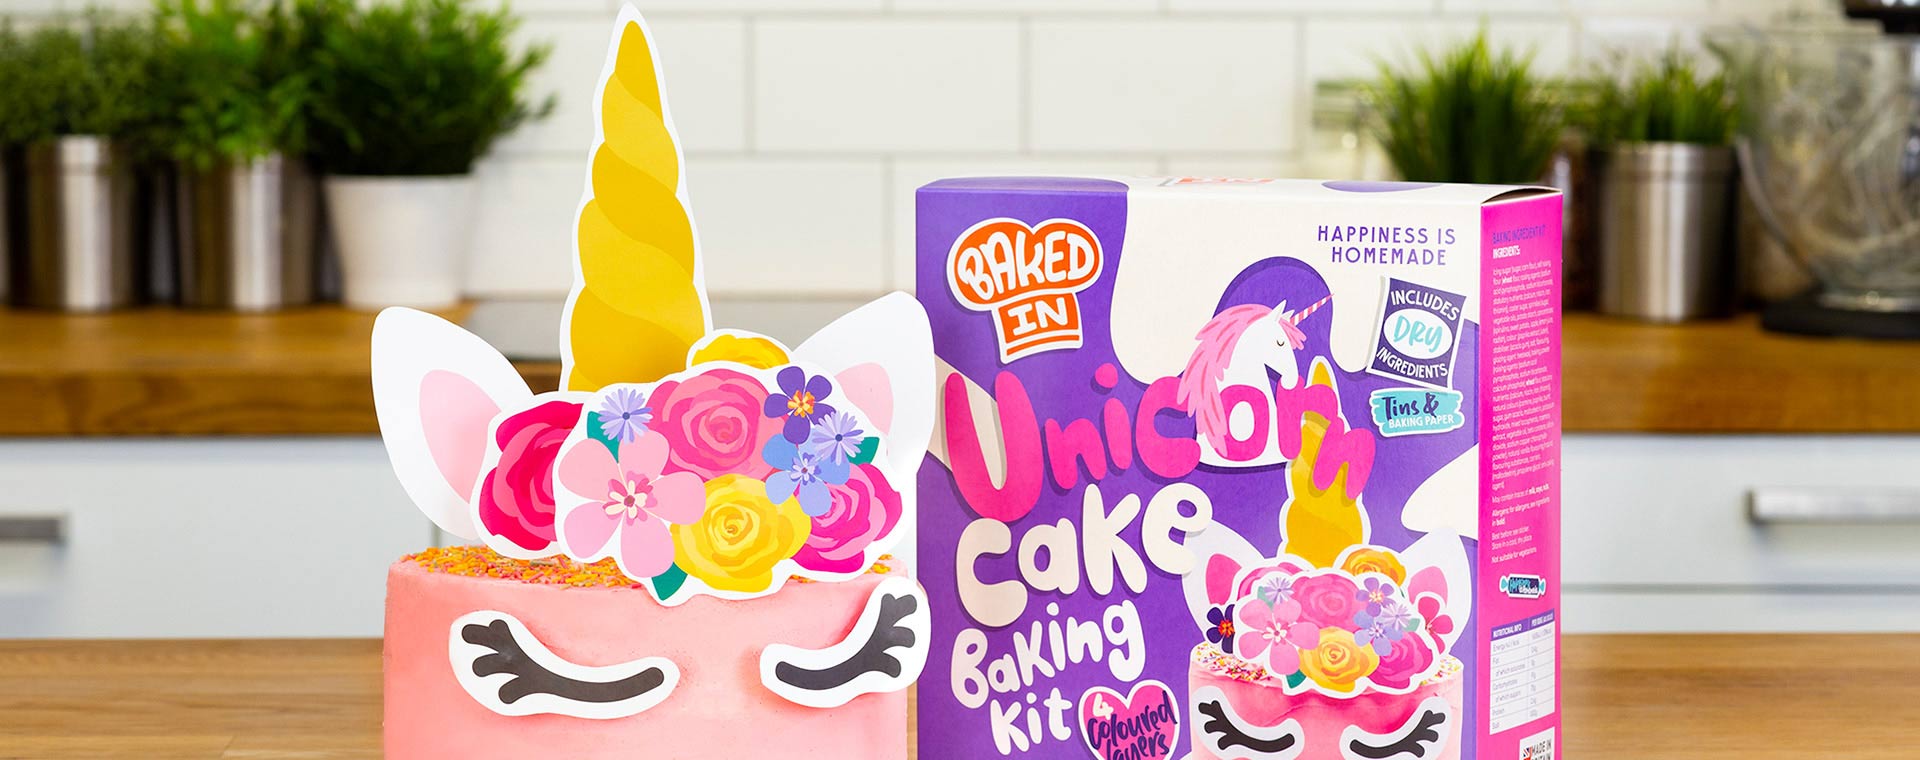 Multi Baked In Unicorn Cake Baking Kit